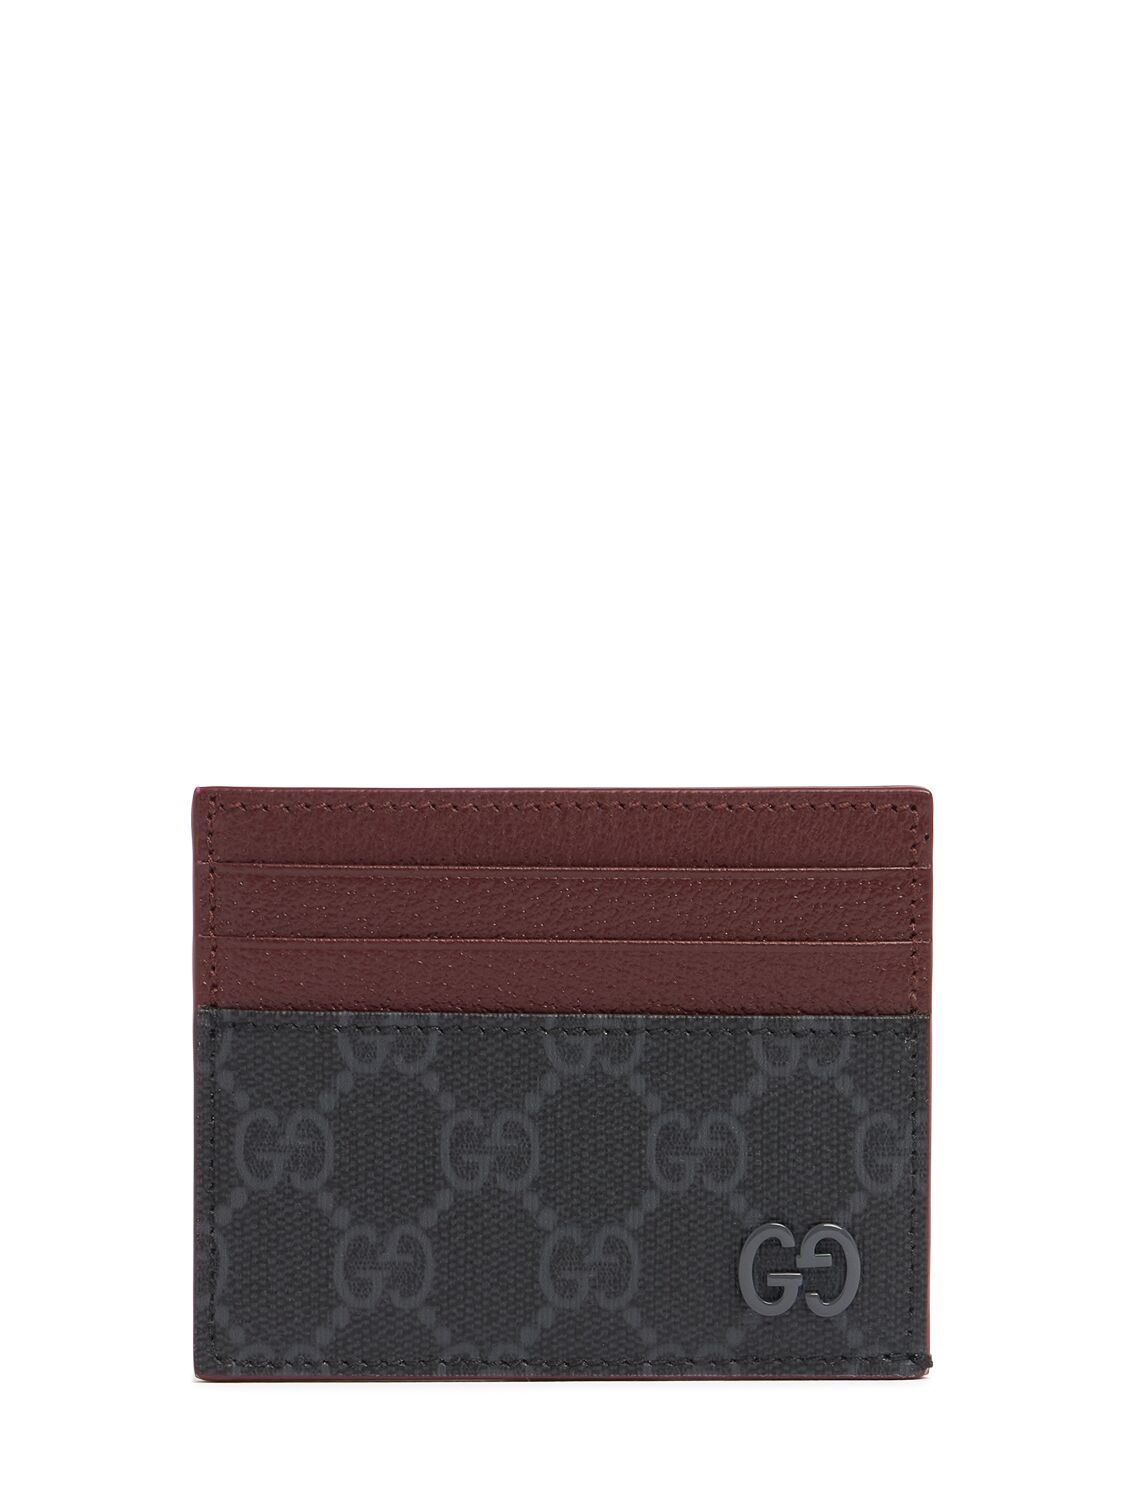 Gucci Bicolor Gg Card Case In Black/bordeaux